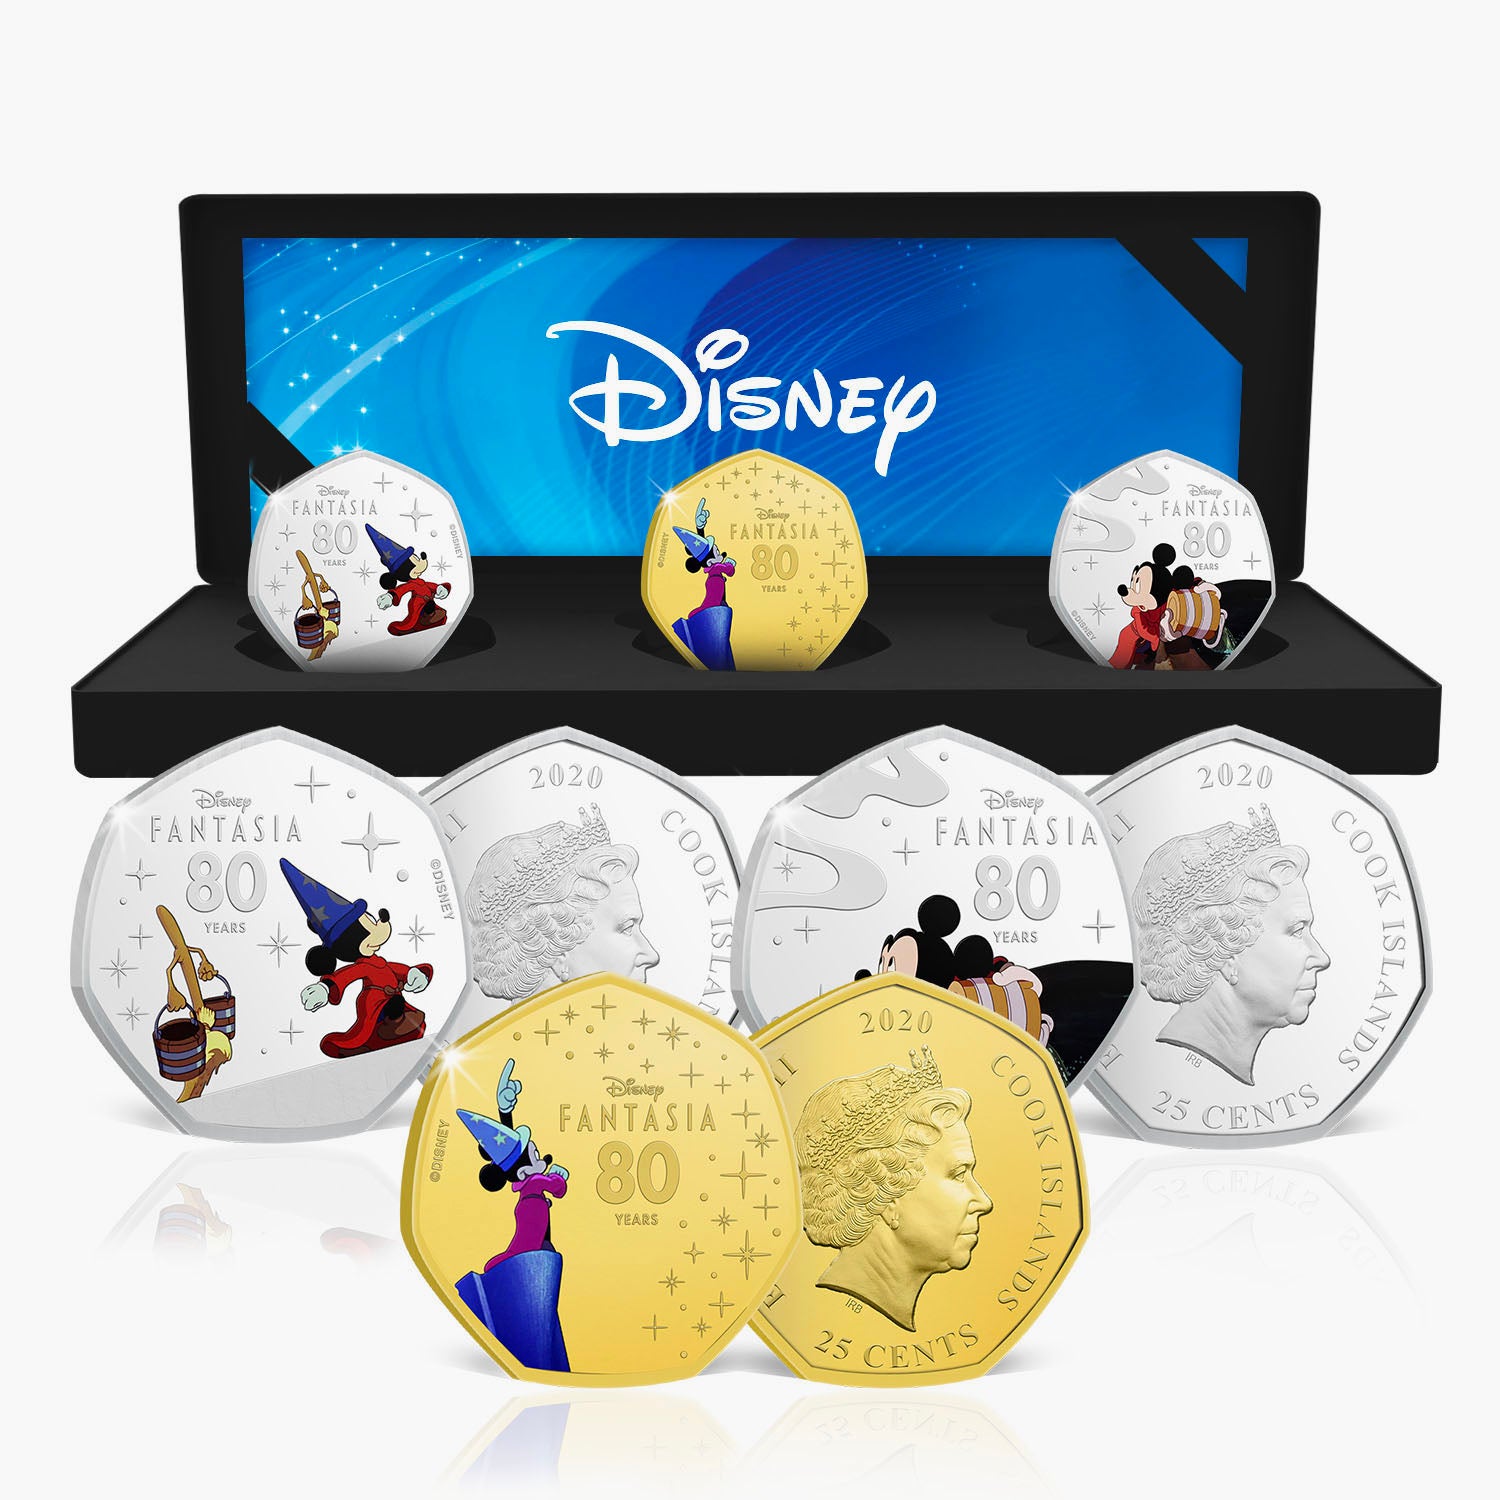 The Disney Fantasia 80th Anniversary Box Set Edition